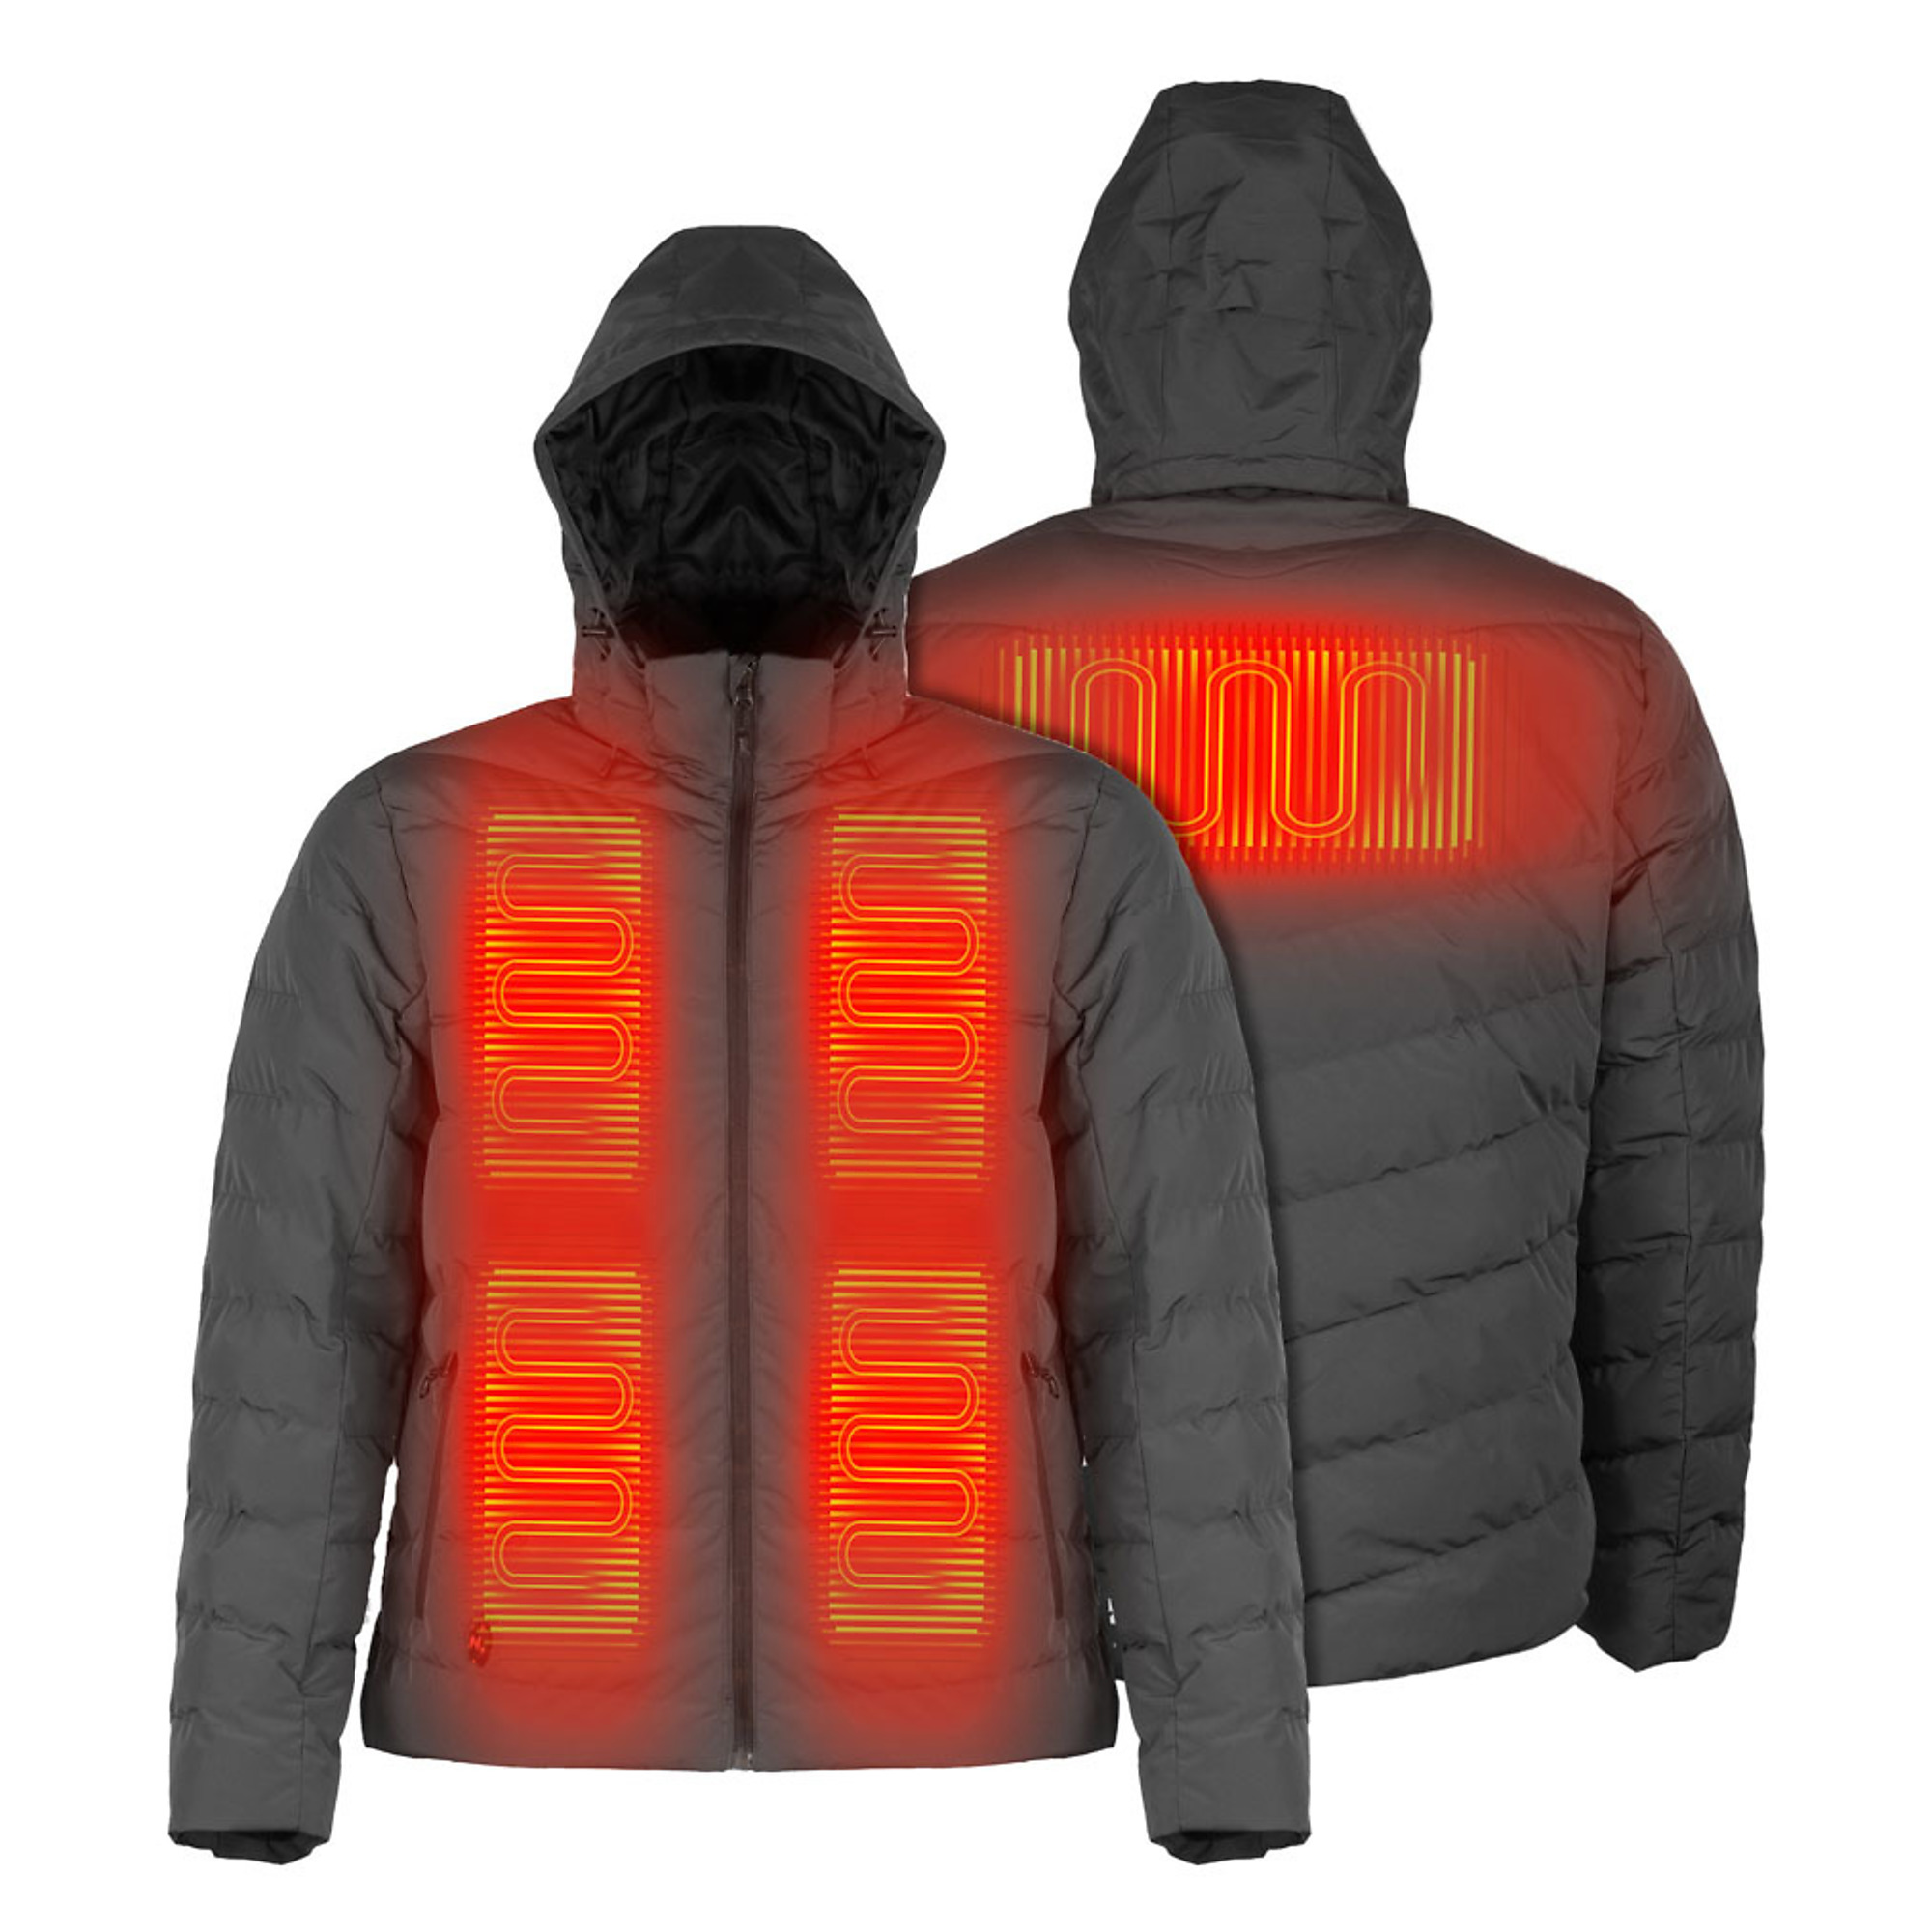 Fieldsheer, Men's Crest Heated Jacket with 7.4v Battery, Size XL, Color Black, Model MWMJ37010522